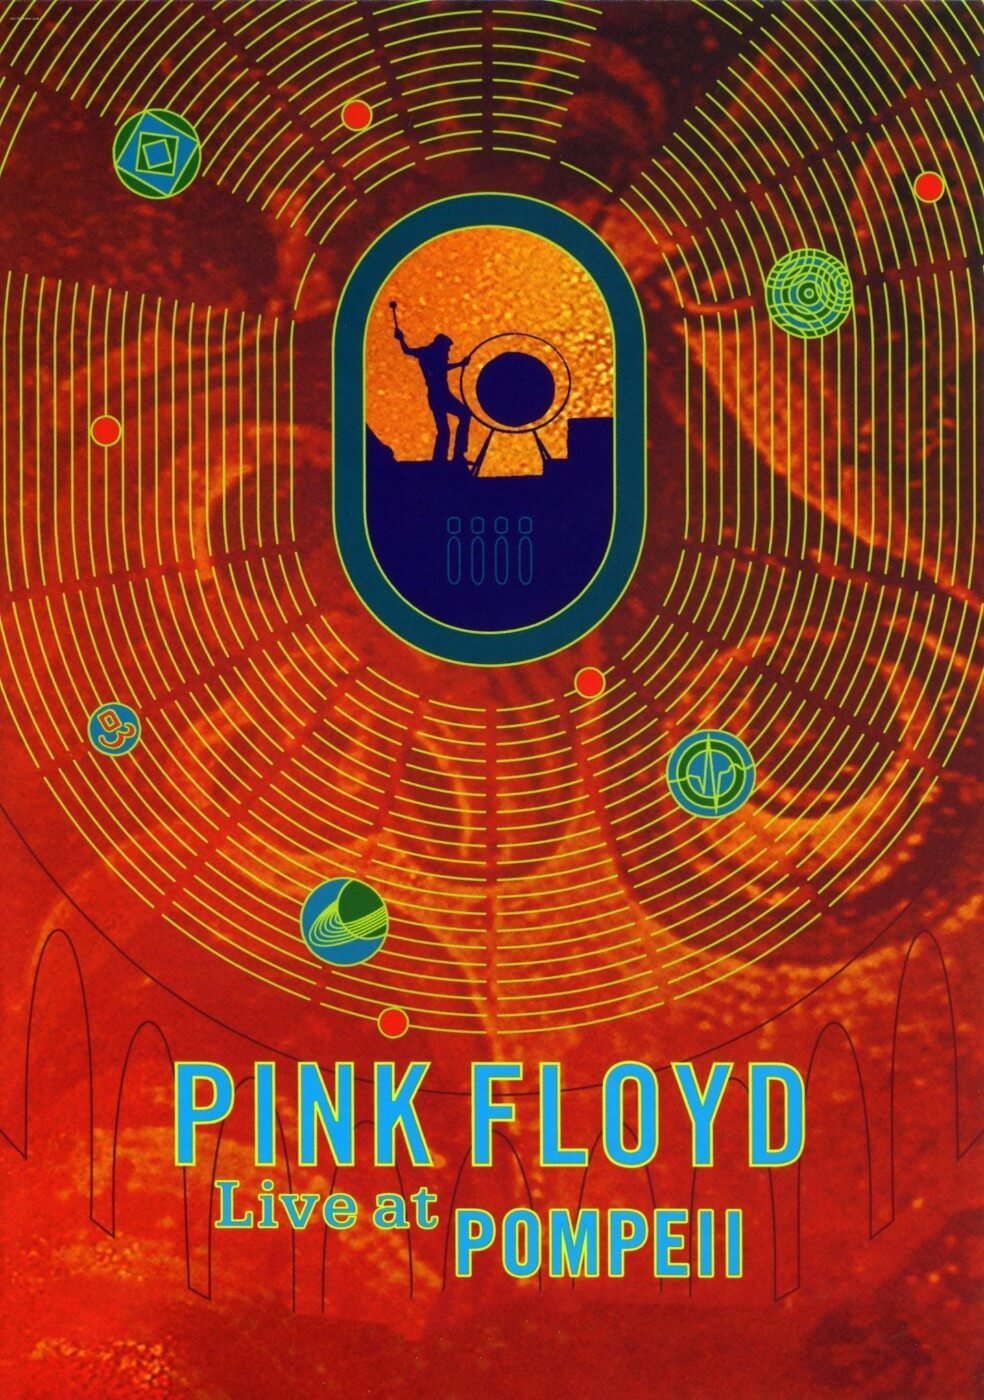 Pink Floyd - Live At Pompei - Retro Vintage Music Poster - Large